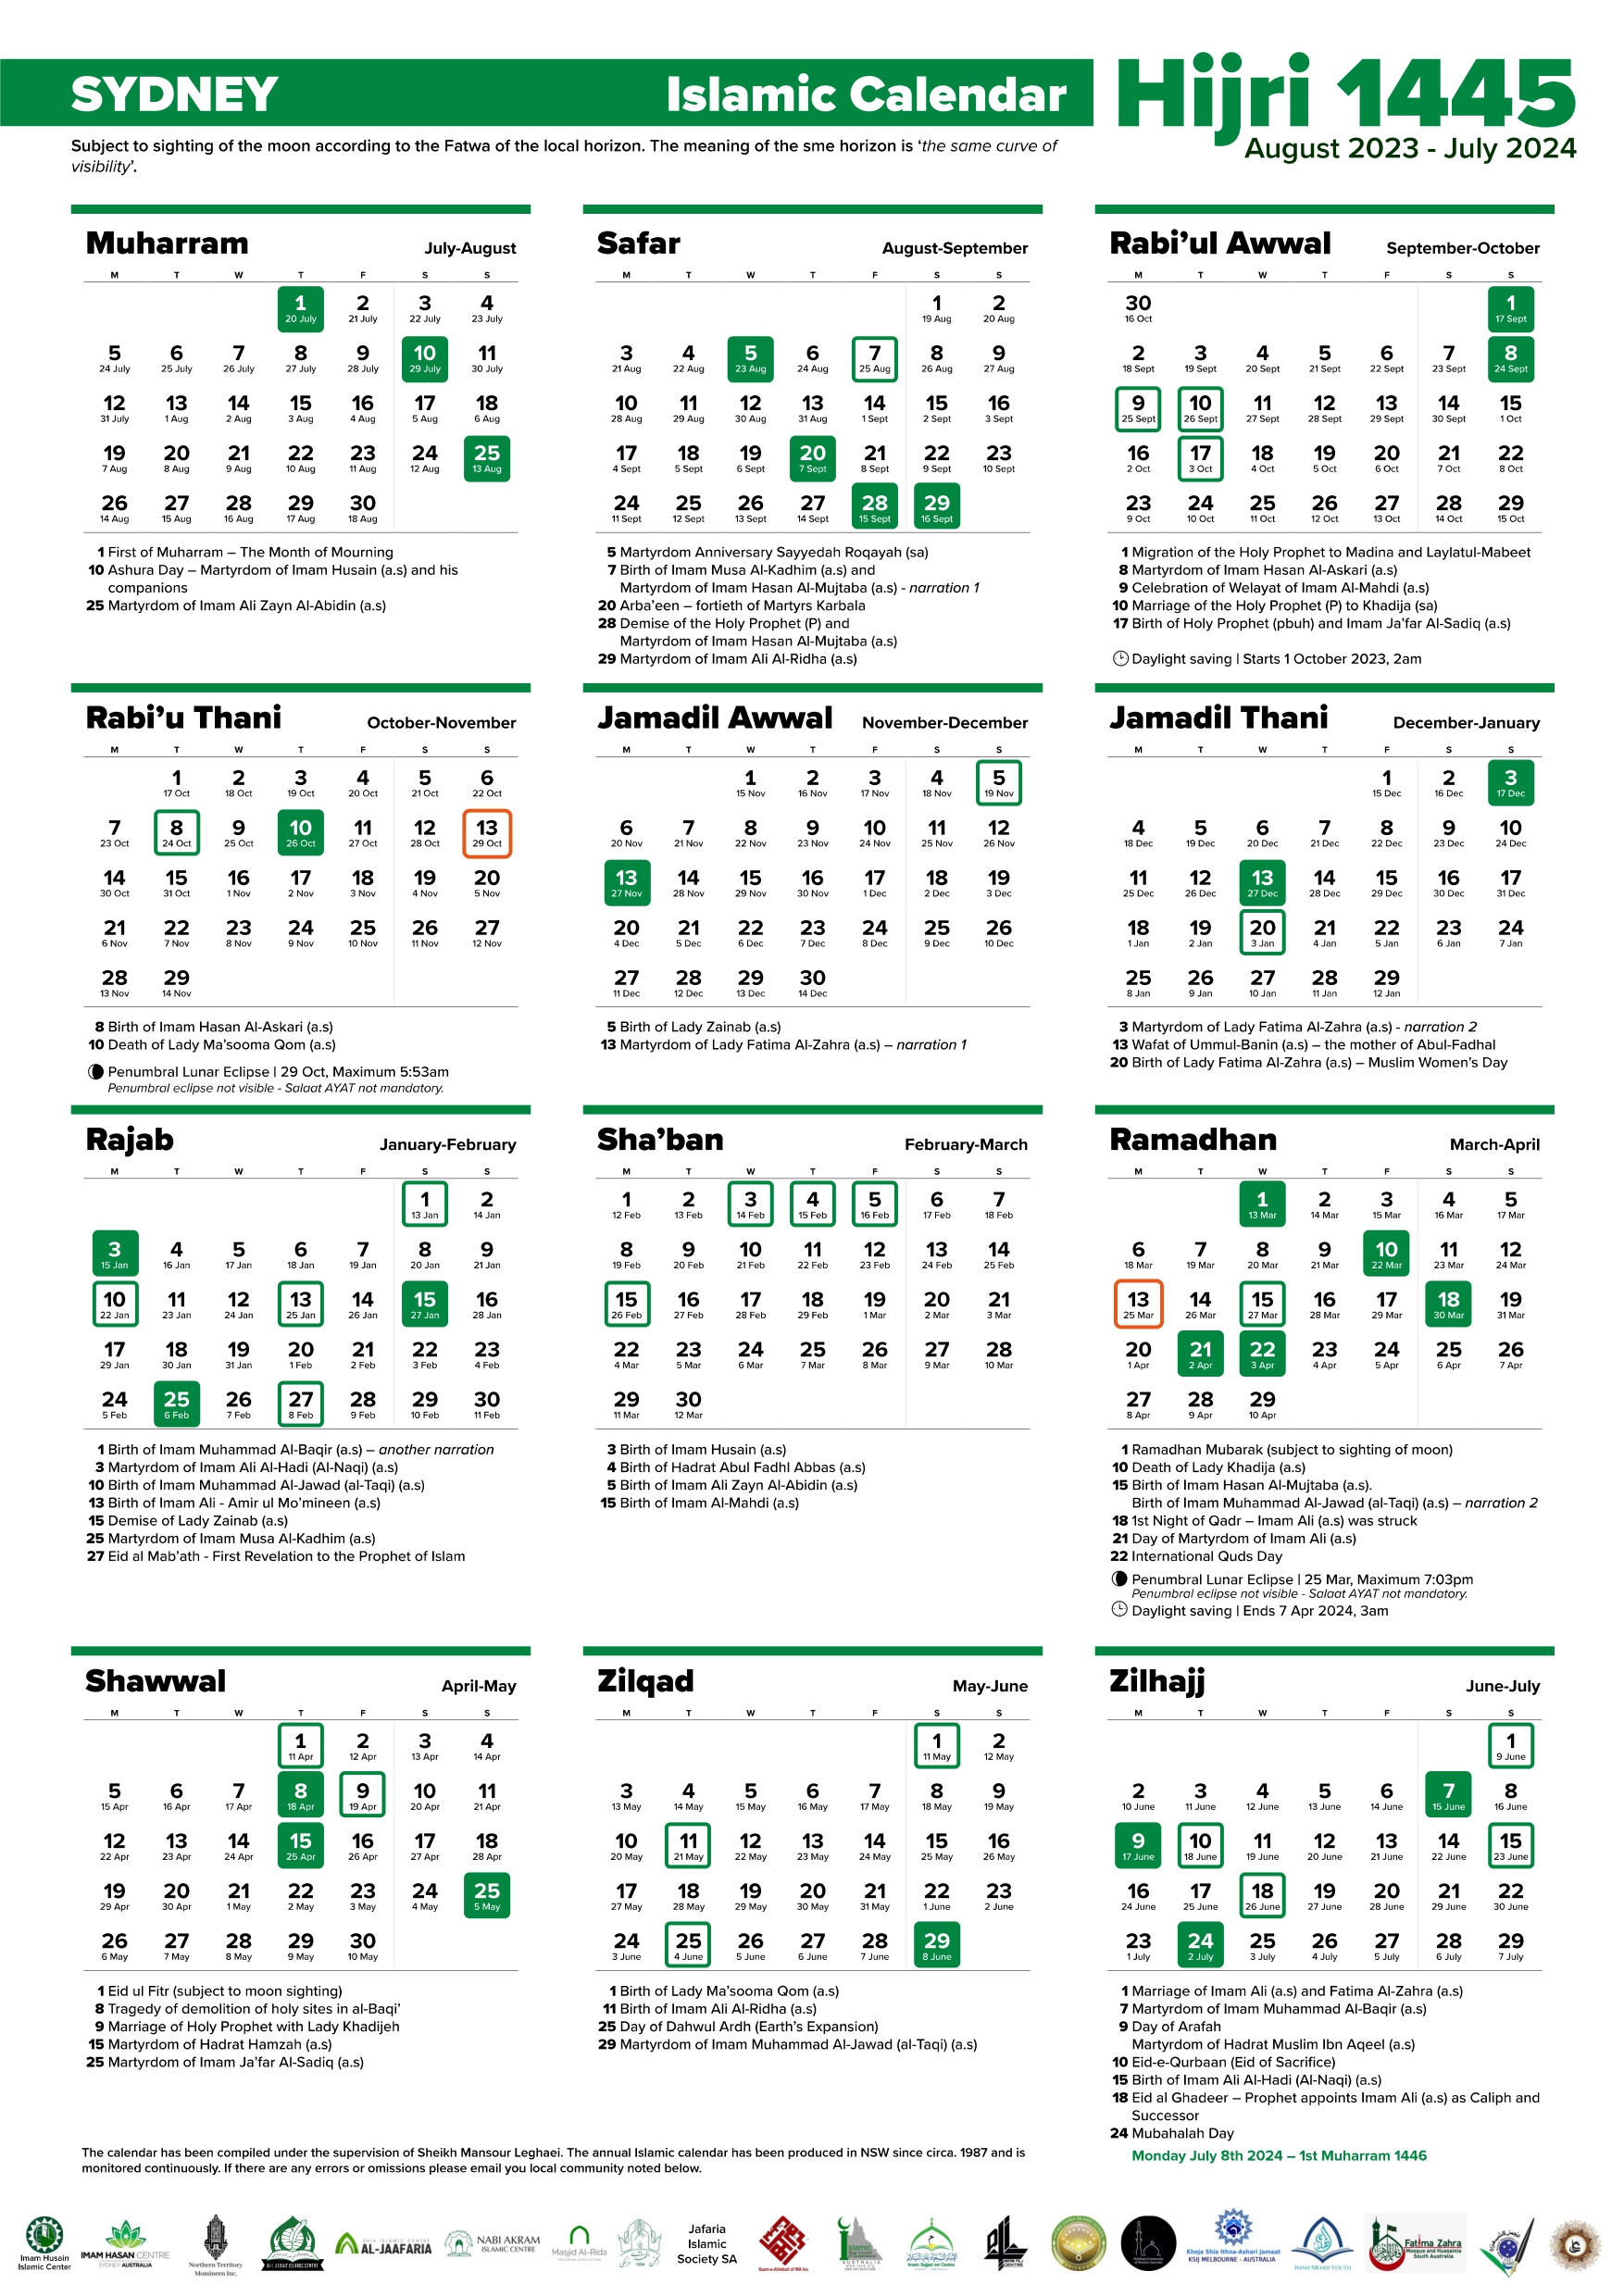 Annual Islamic Calendar 1445 Ah / 2023-2024 Ad – Imam Husain in 27 July 2024 In Islamic Calendar